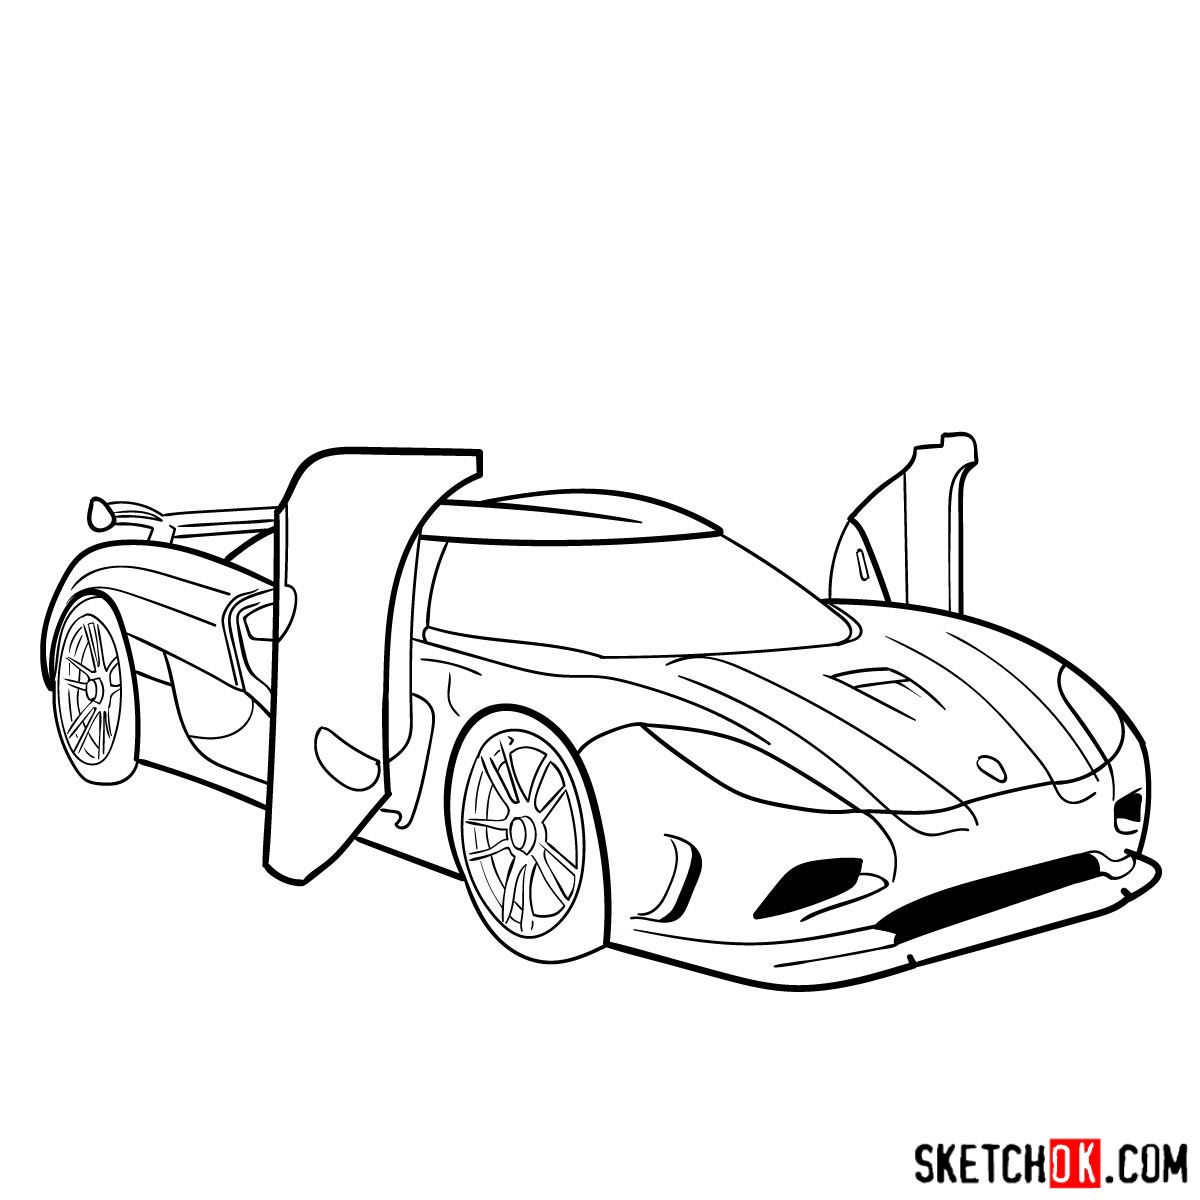 How to draw Koenigsegg Agera R Oman - step 13